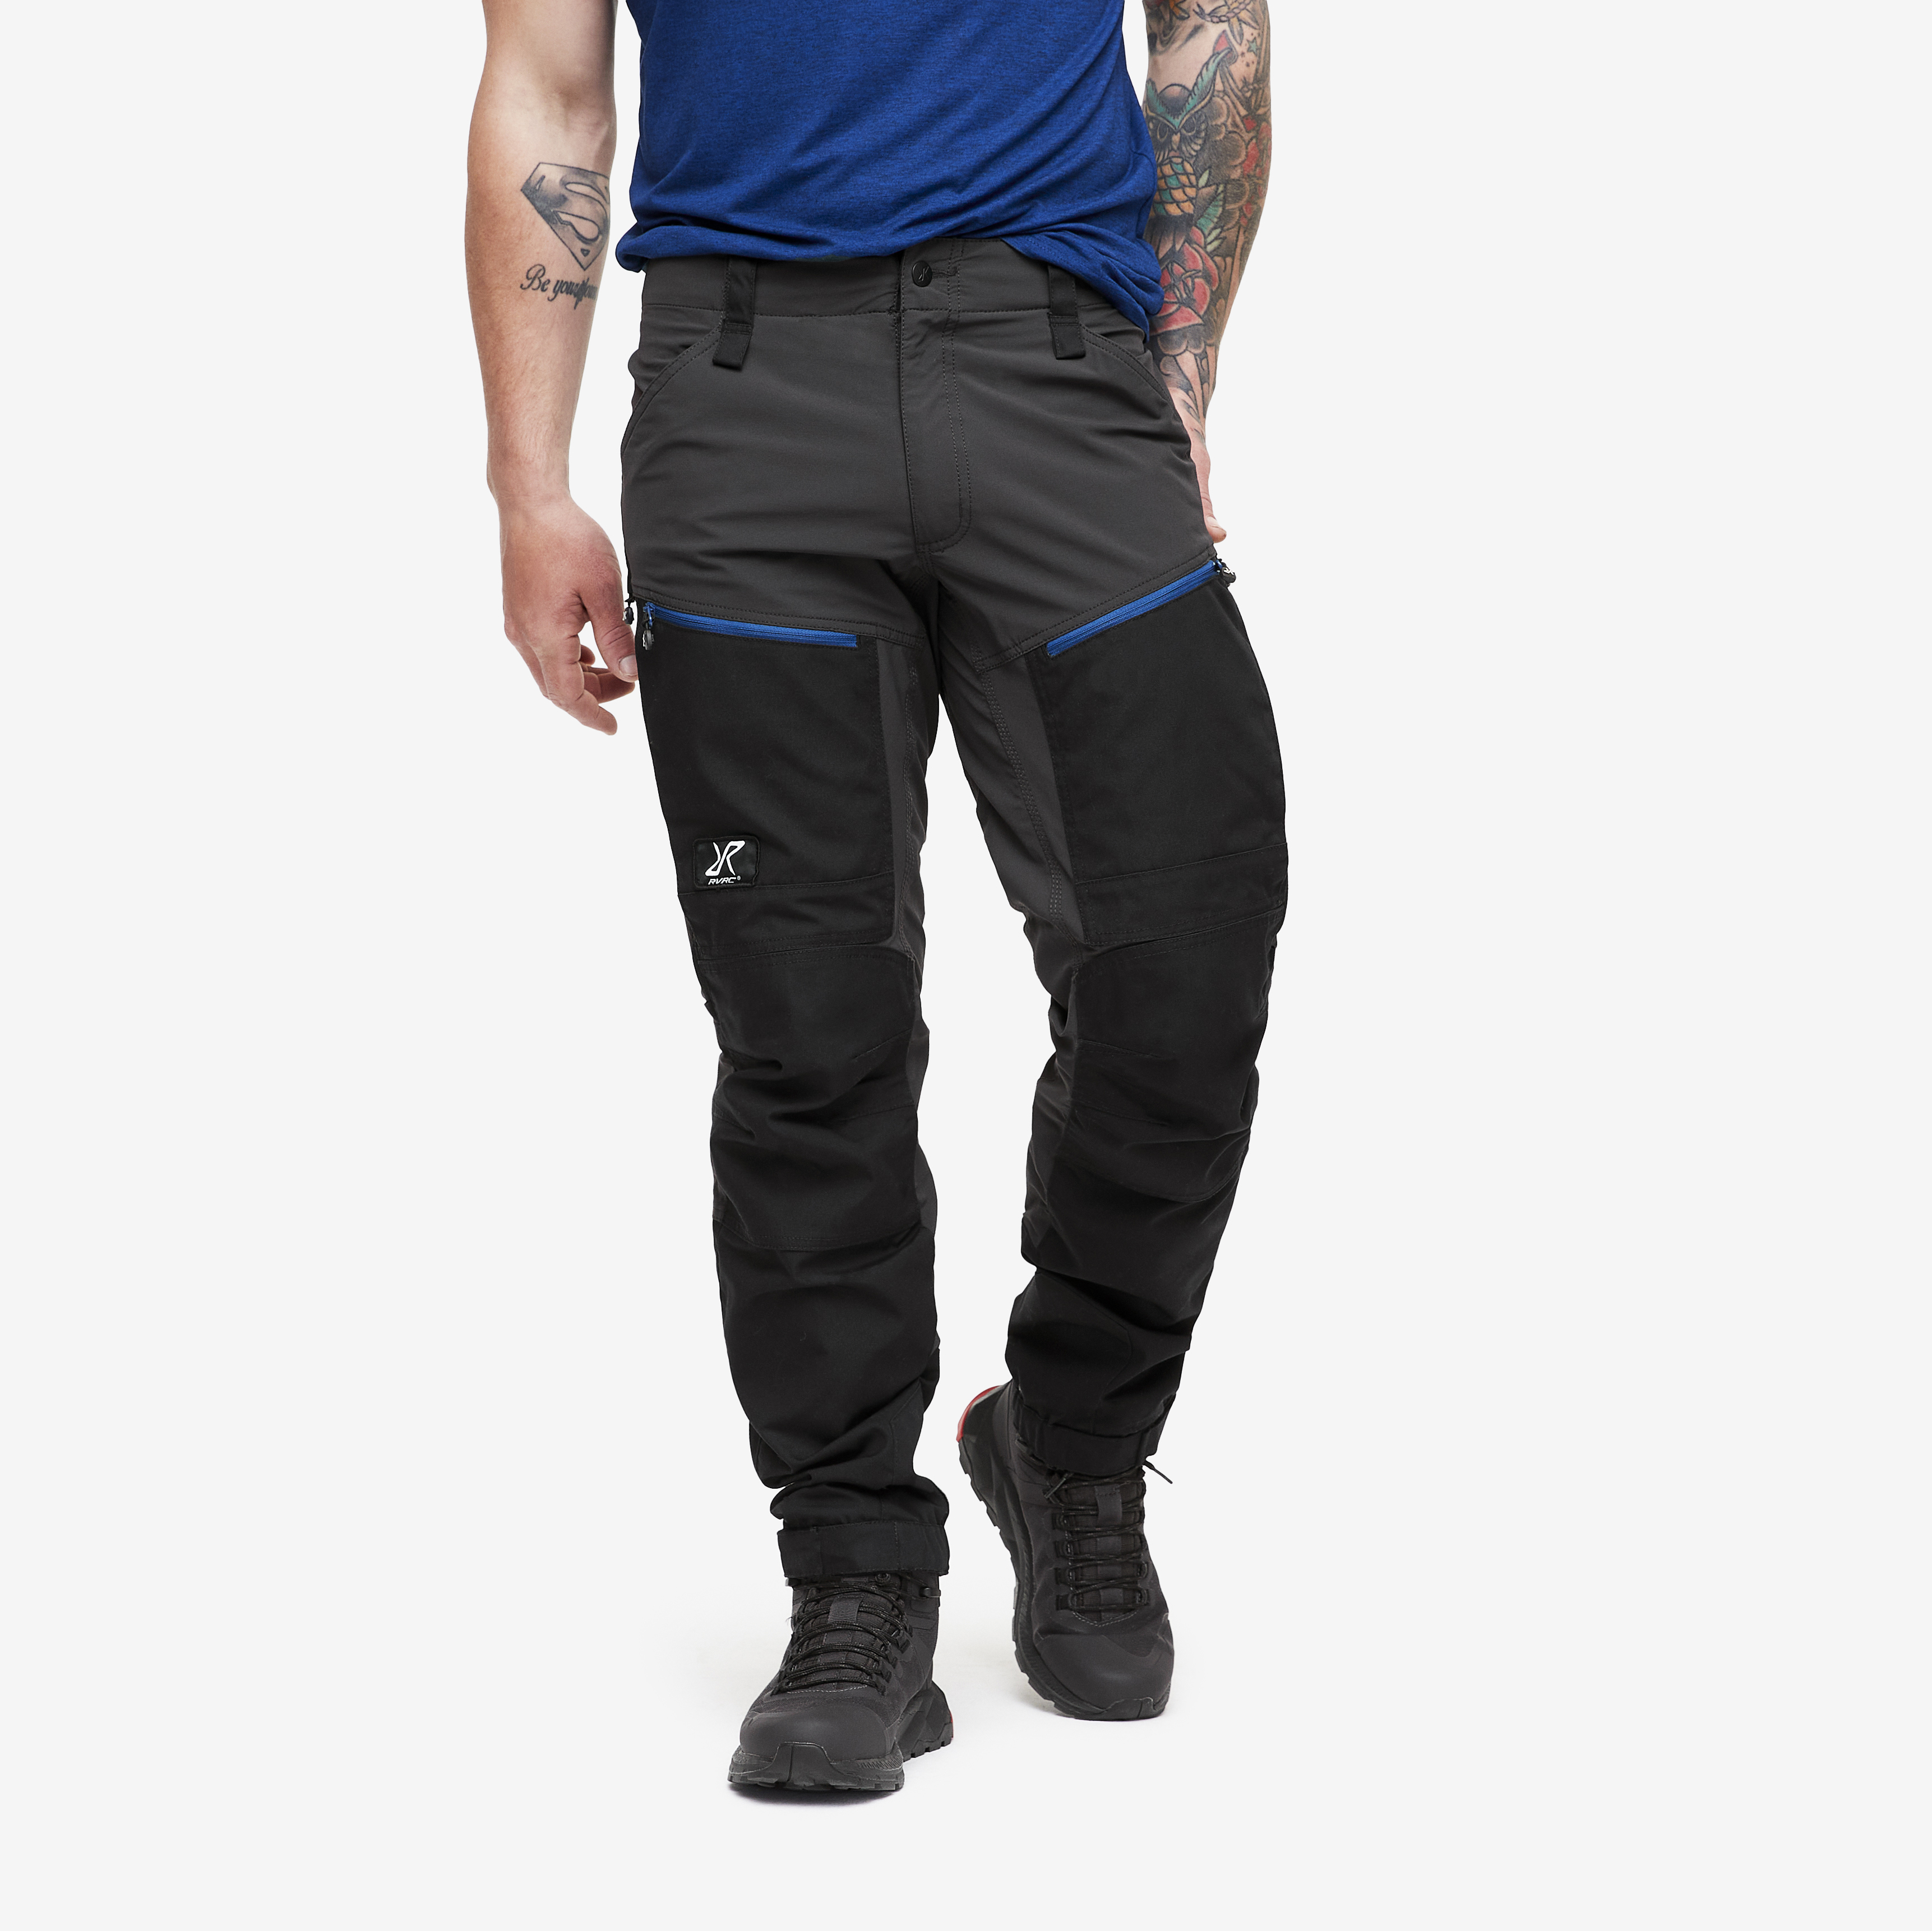 RVRC GP Pro Pants Anthracite/Dark Blue Men